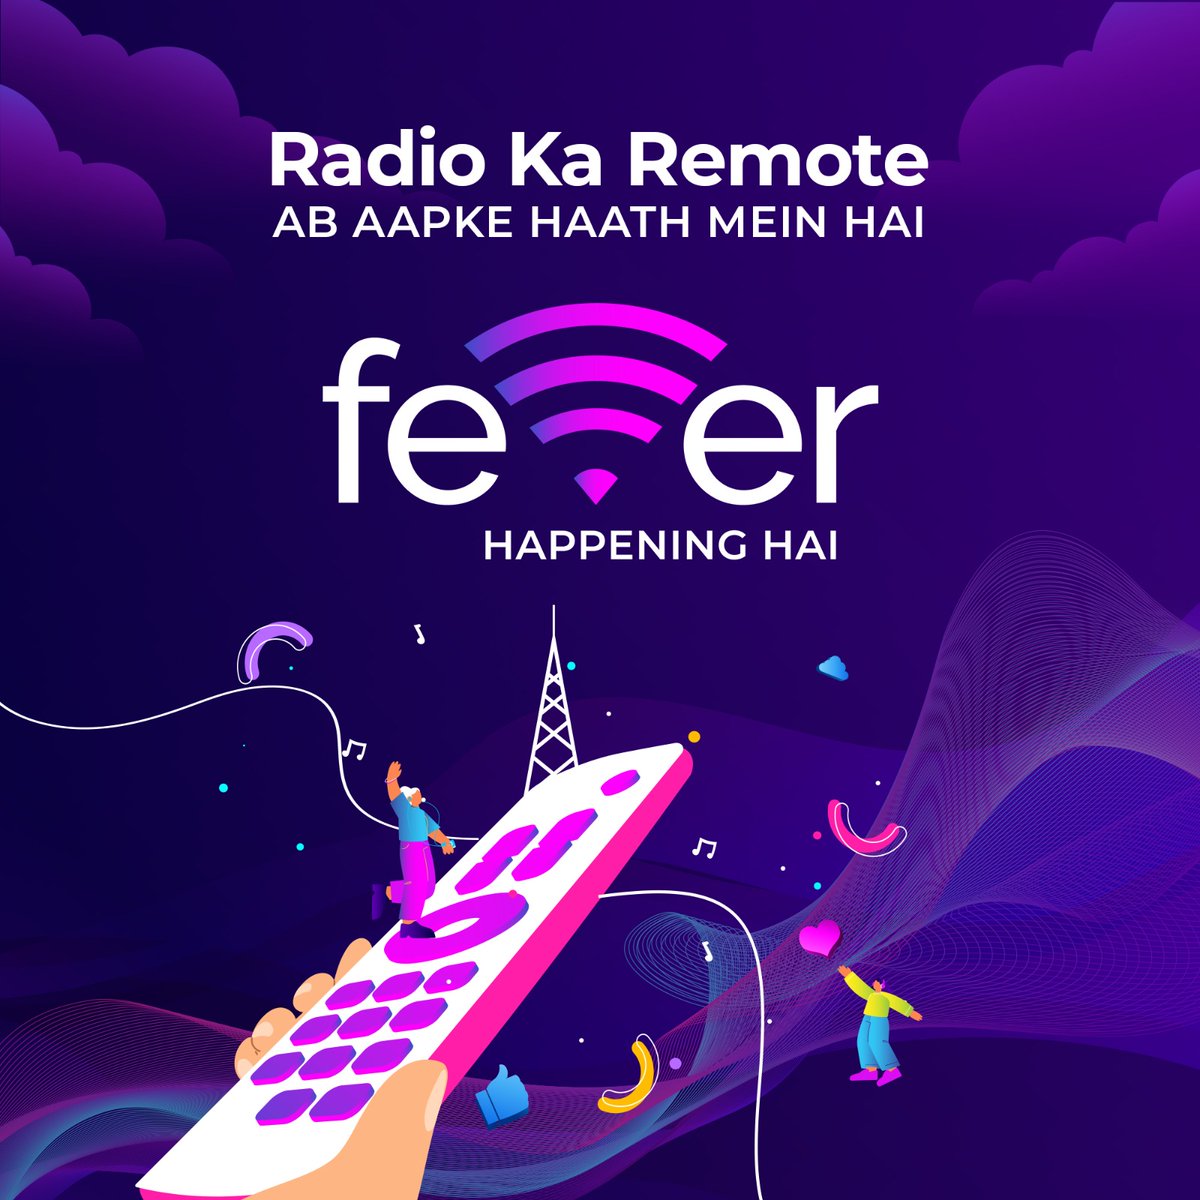 b aap ke haath hai Fever ka remote. chose from happening songs, RJs, movies and more. #FeverFM Happening Hai #happeninghai #radio